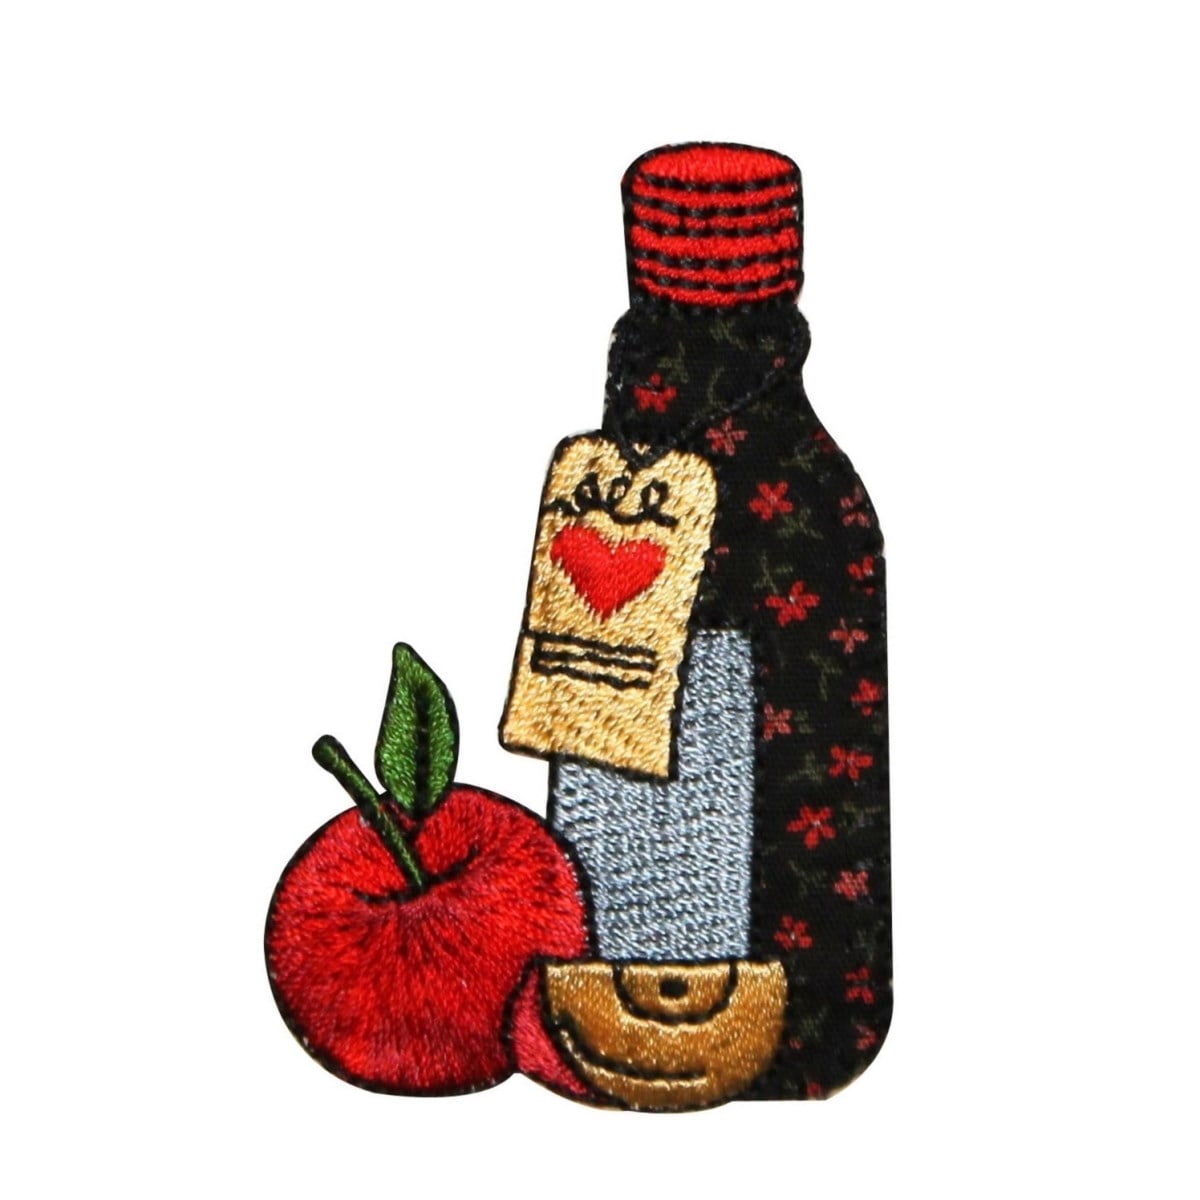 walmart apple juice bottles